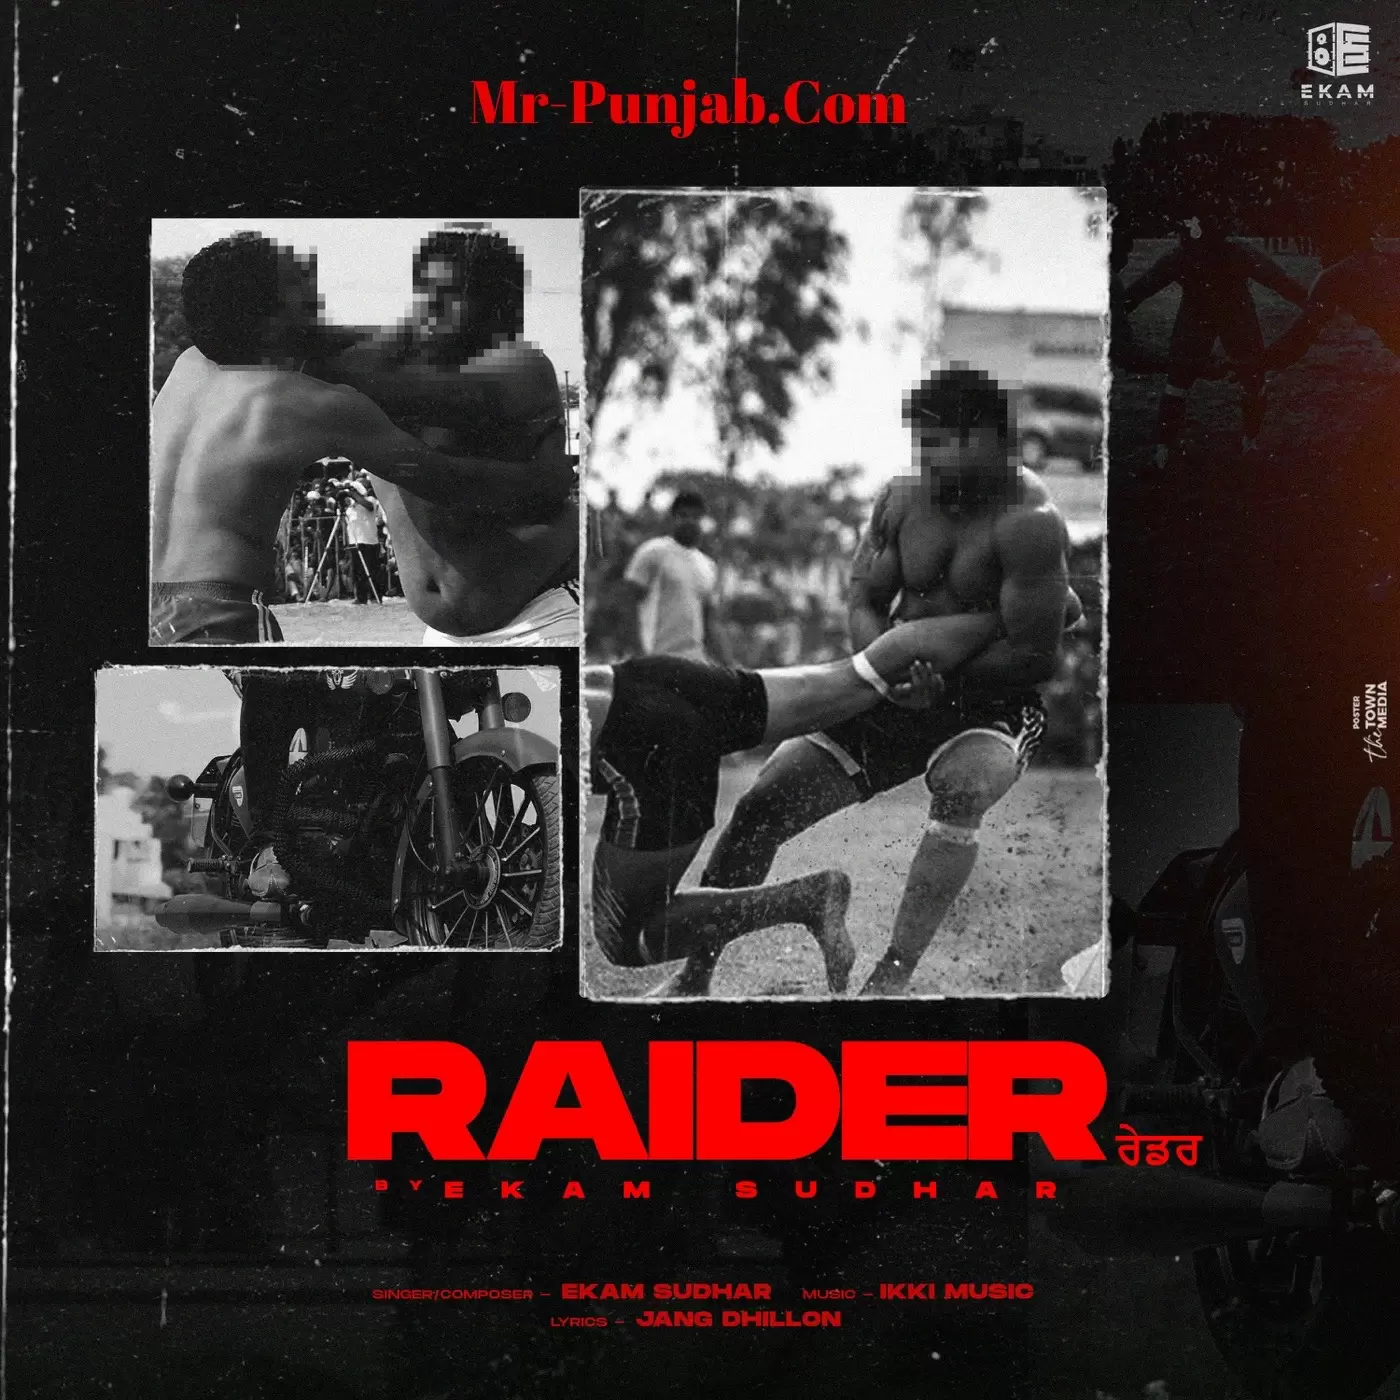 Raider Ekam Sudhar Mp3 Download Song - Mr-Punjab